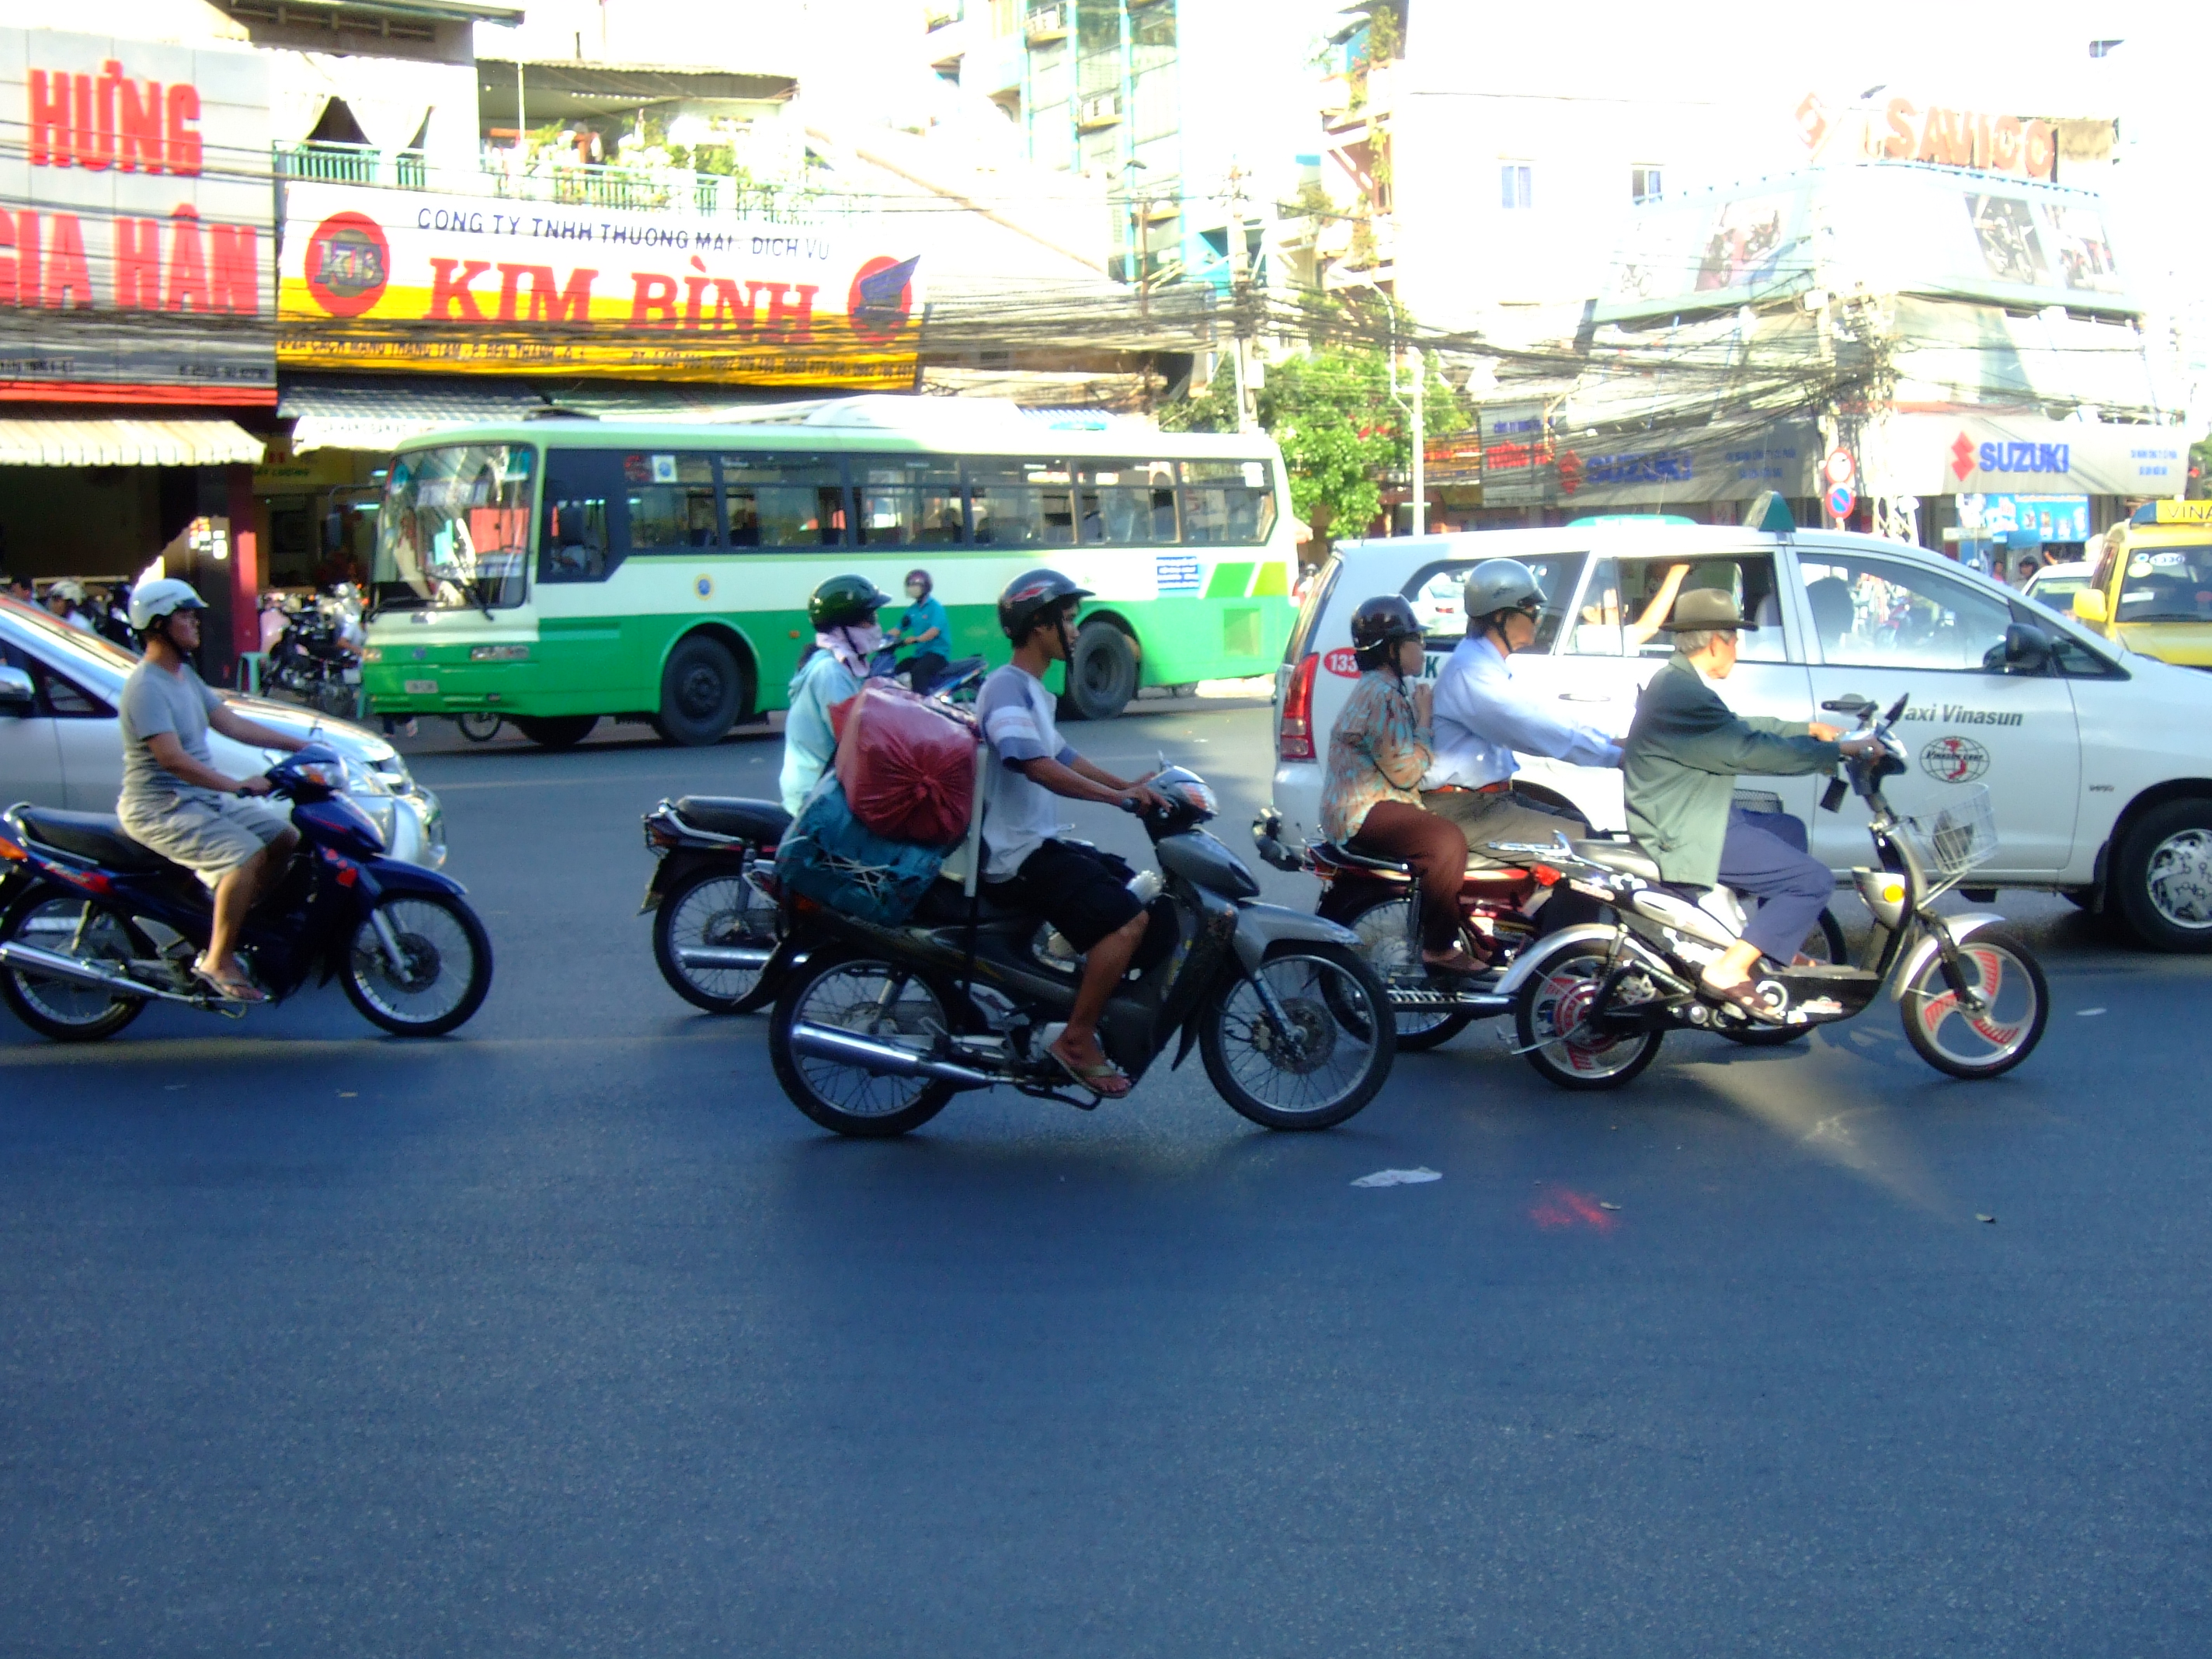 Vietnam Ho Chi Minh City motorbike street scenes Feb 2009 108